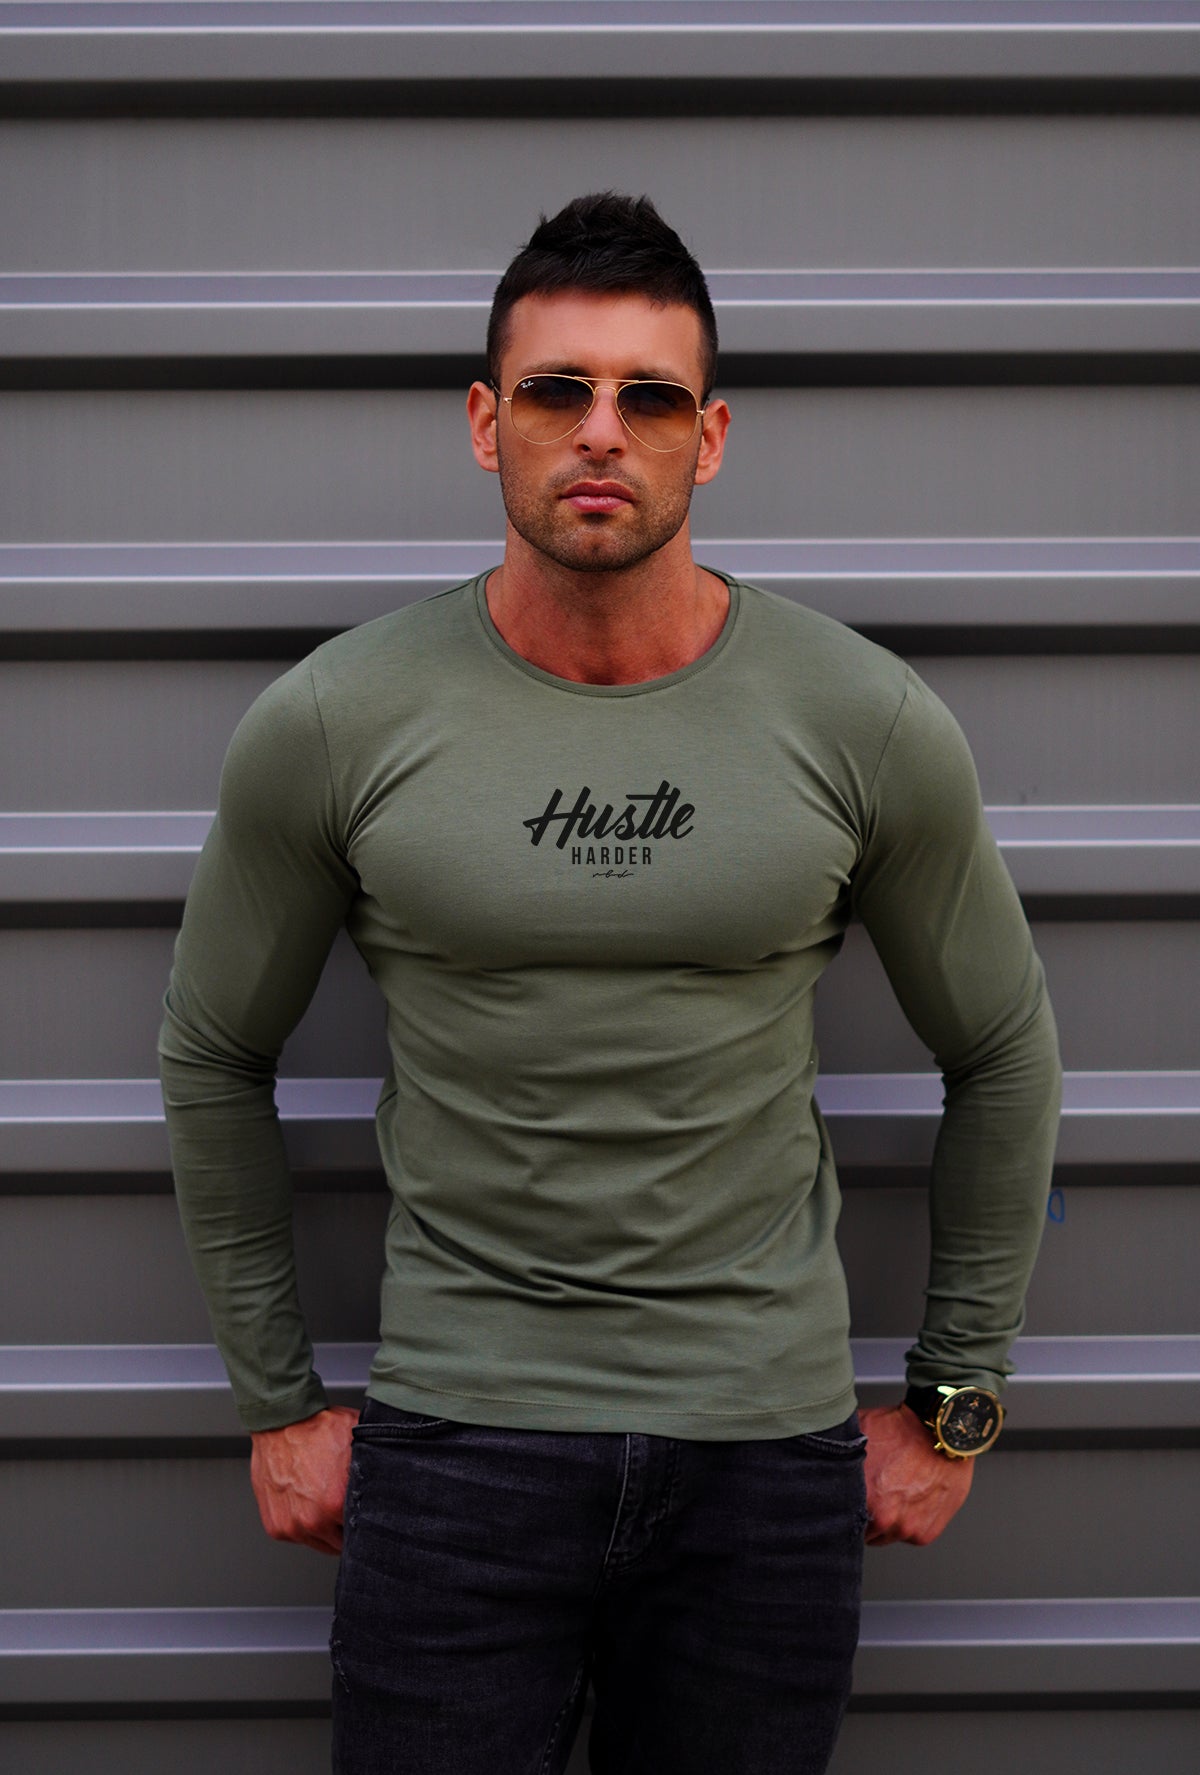 Mens Long Sleeve T-shirt "Hustle Harder" MD971